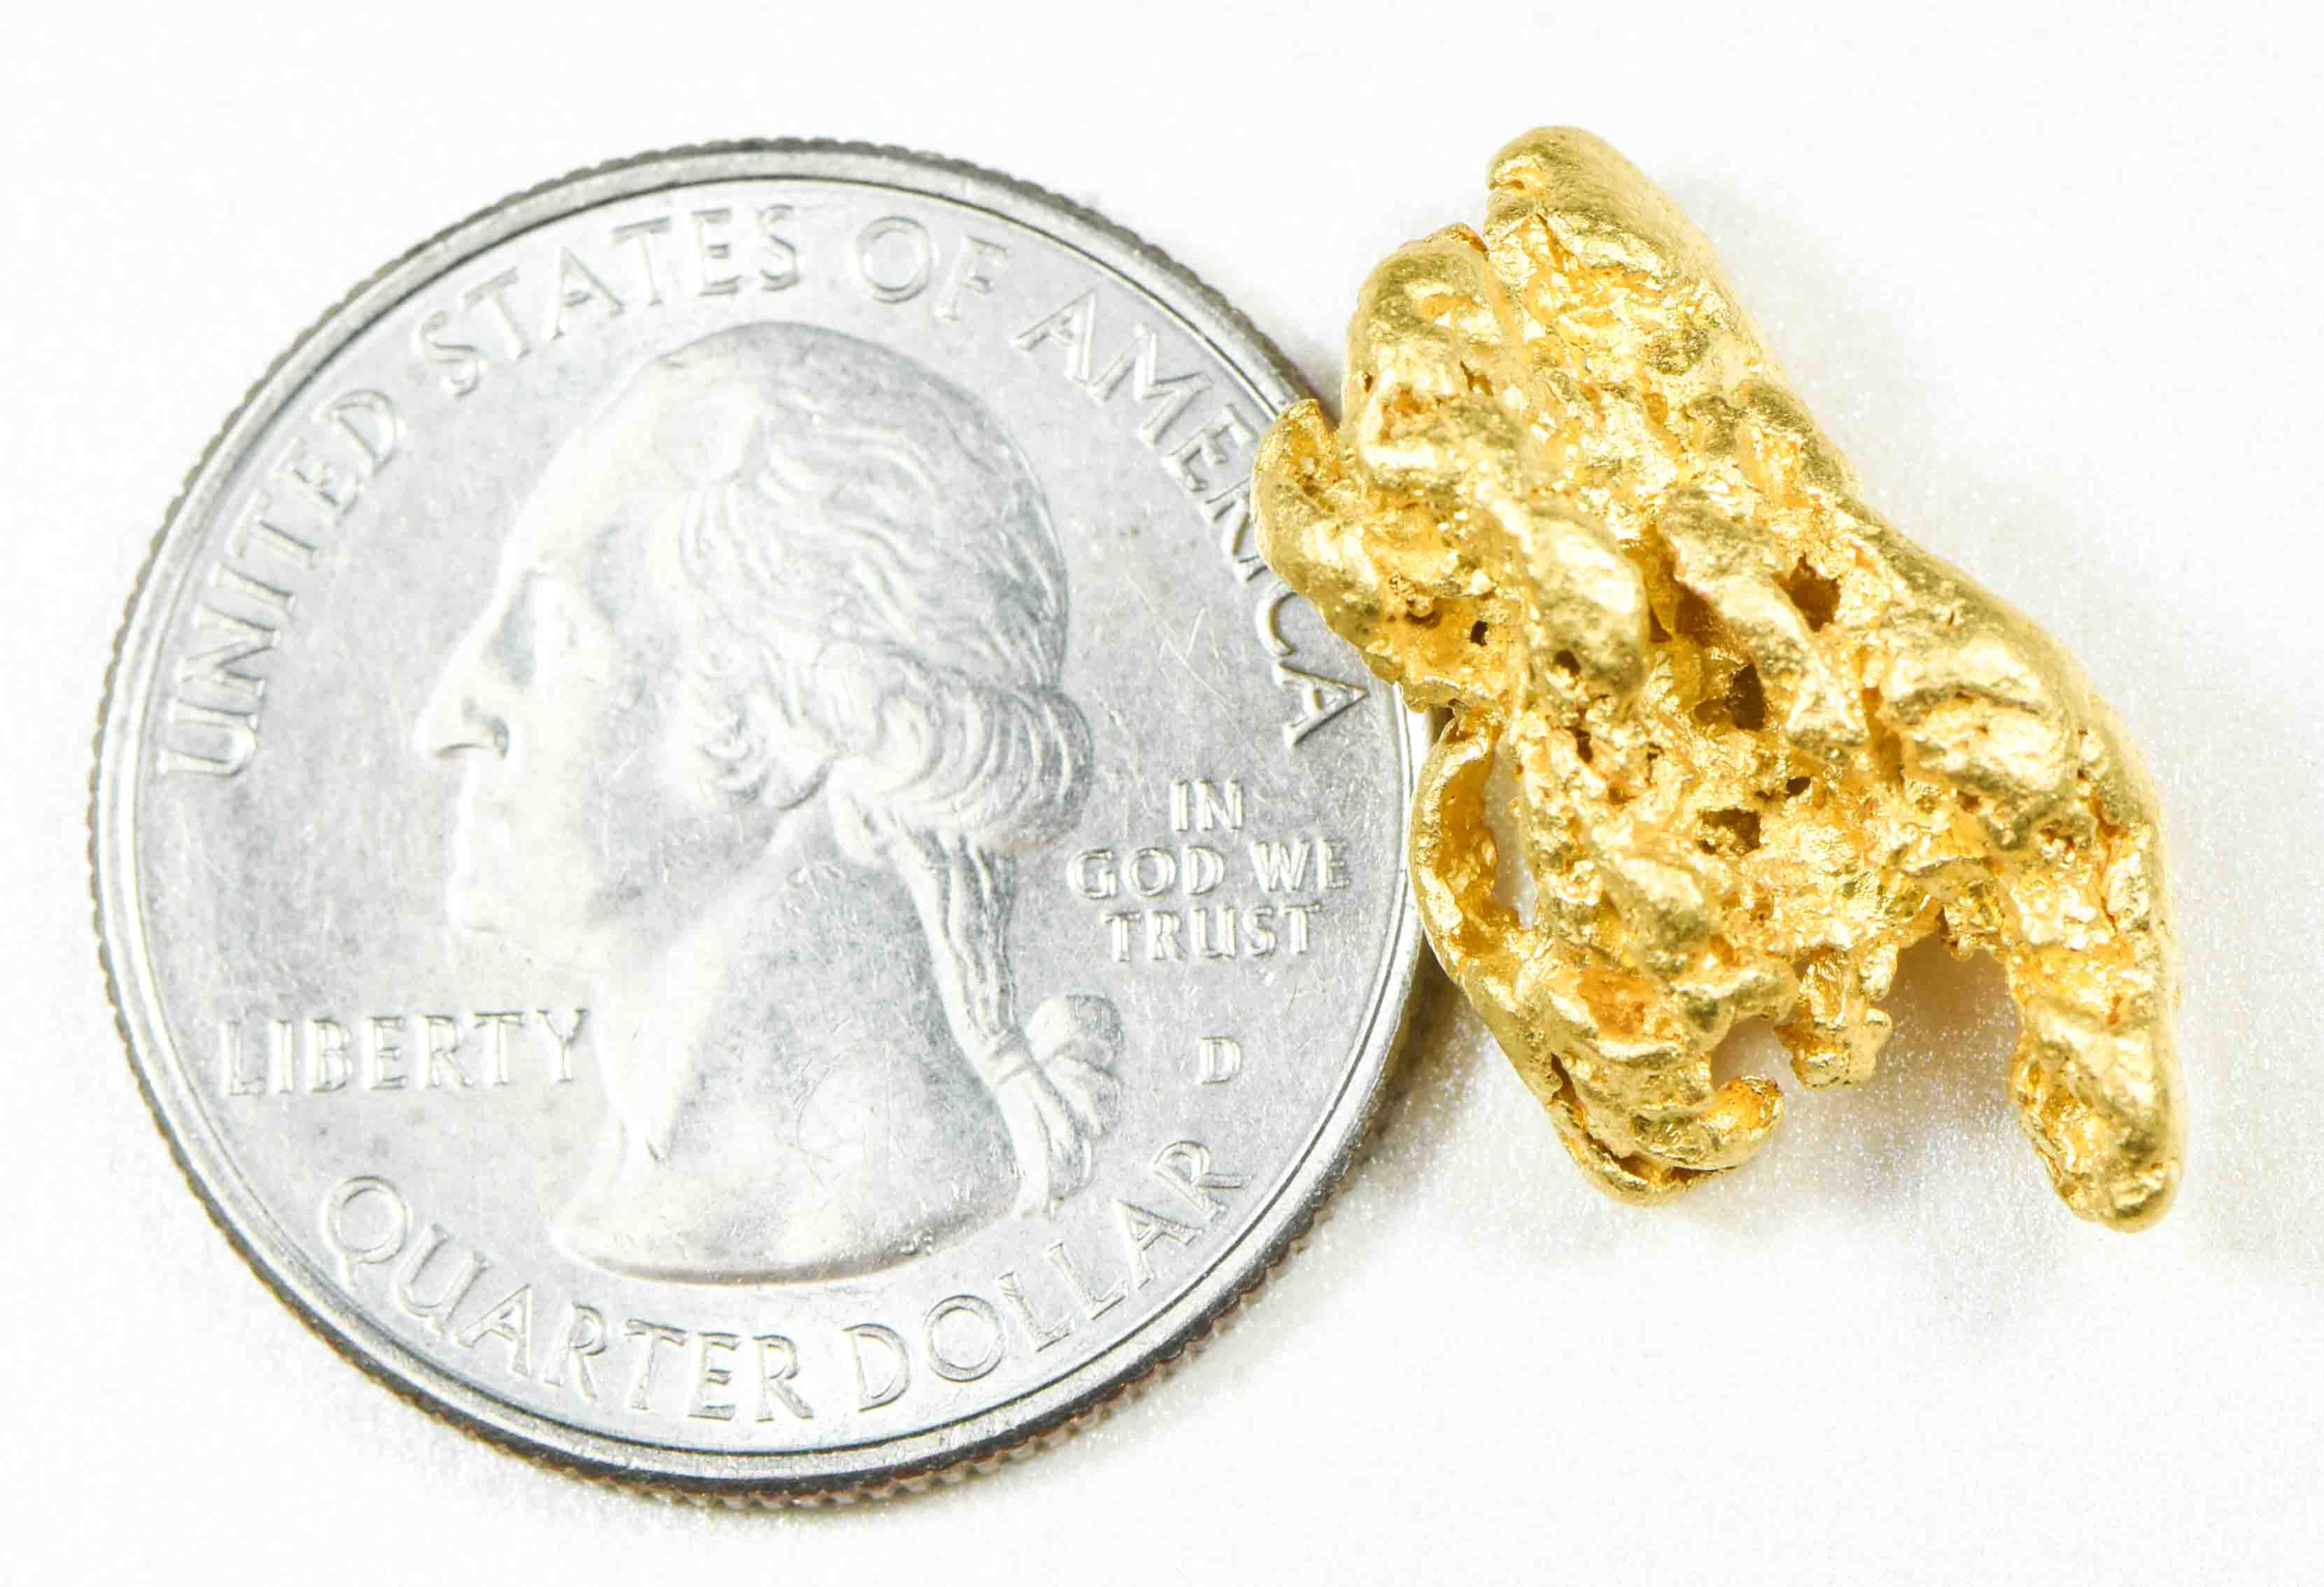 #1104 Natural Gold Nugget Australian 9.42 Grams Genuine